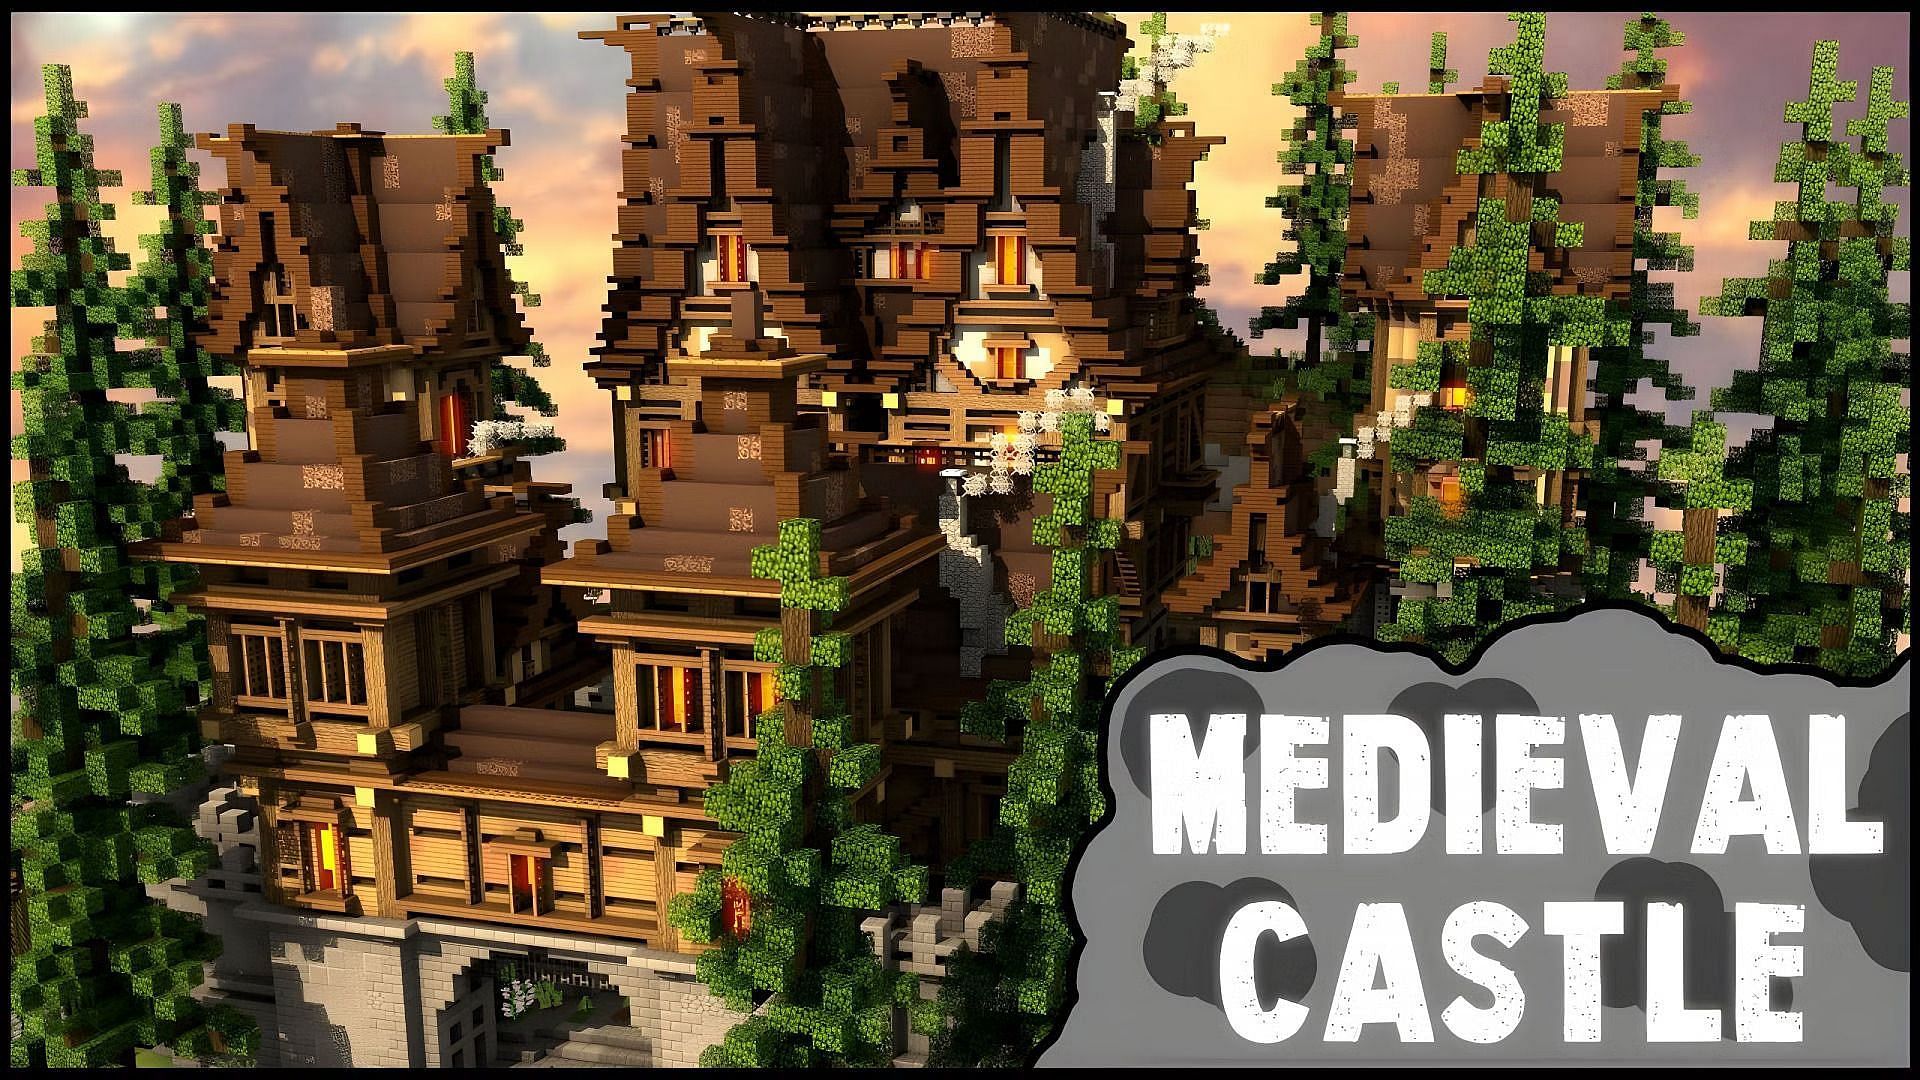 Medieval castles in Minecraft